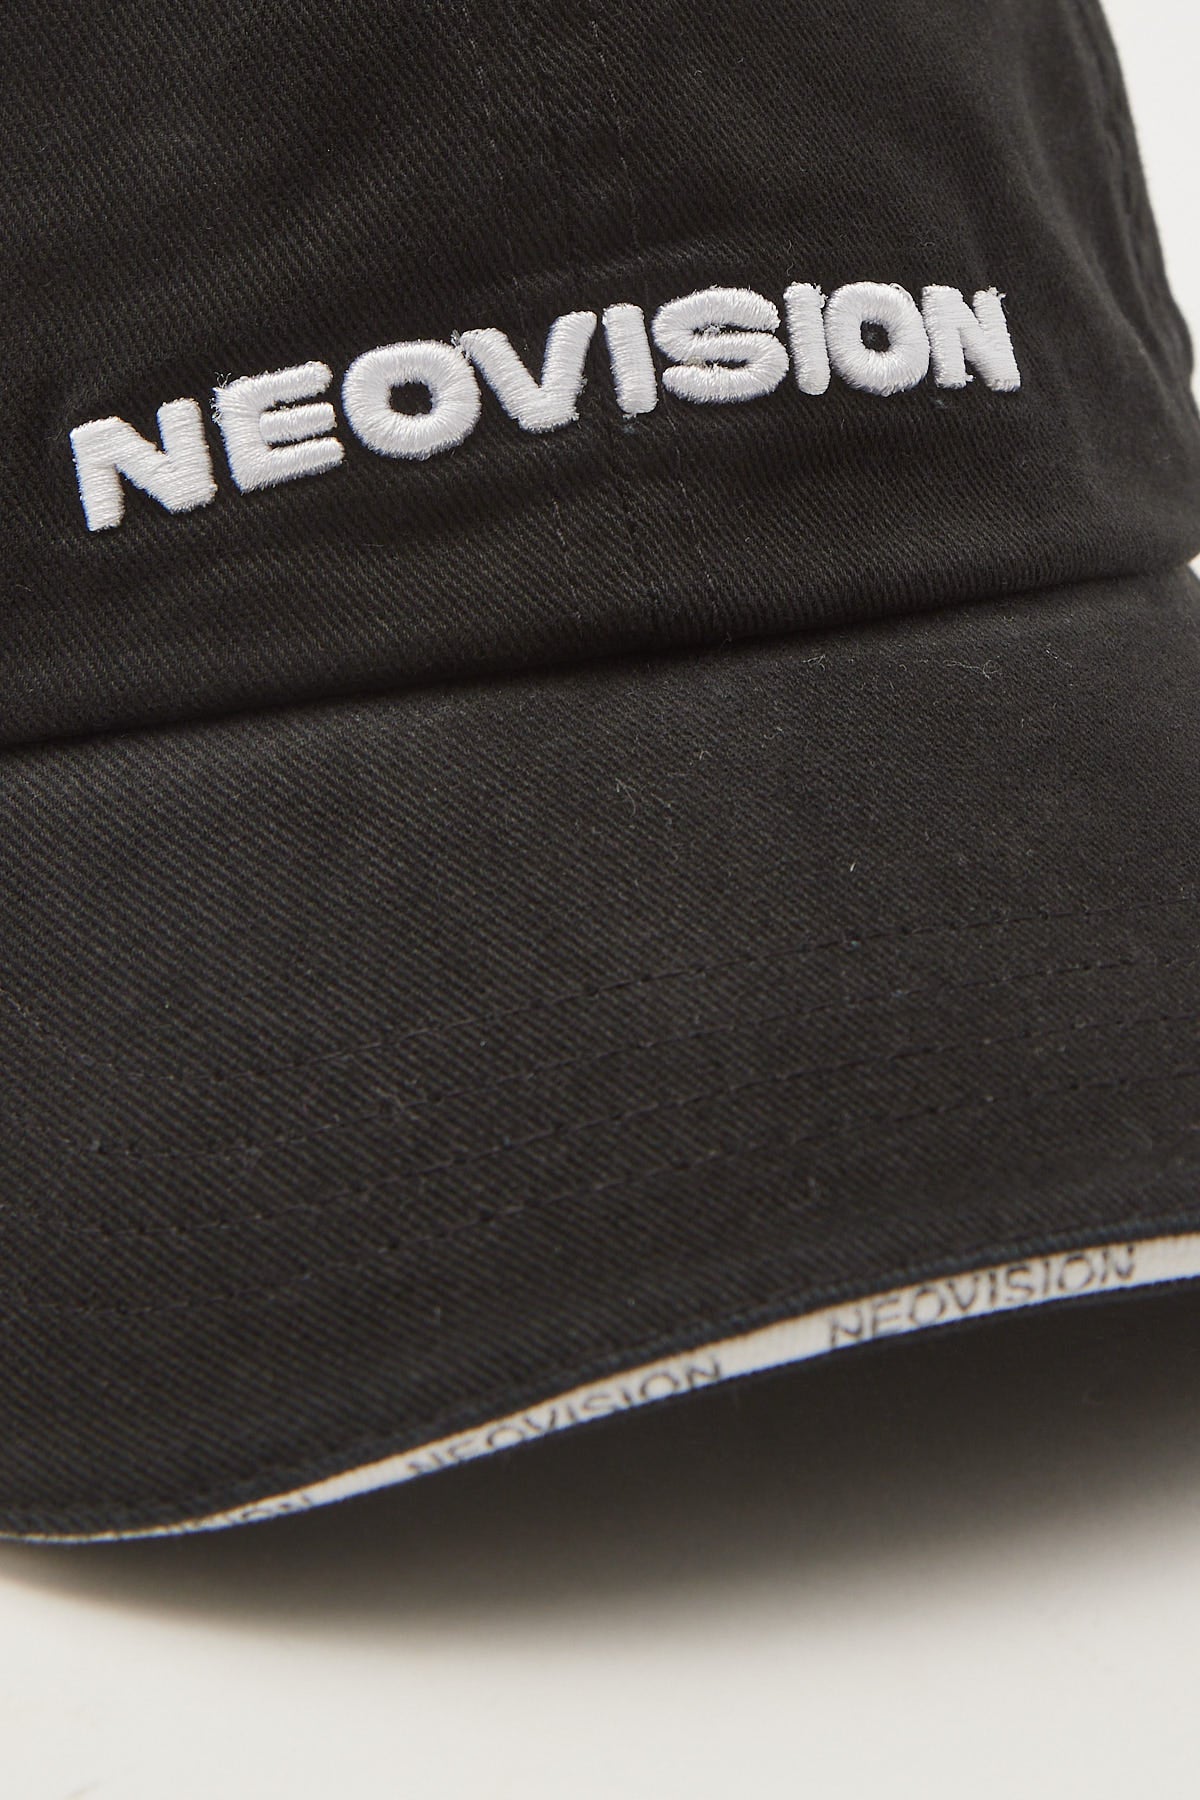 Neovision Encryption Dad Cap Black